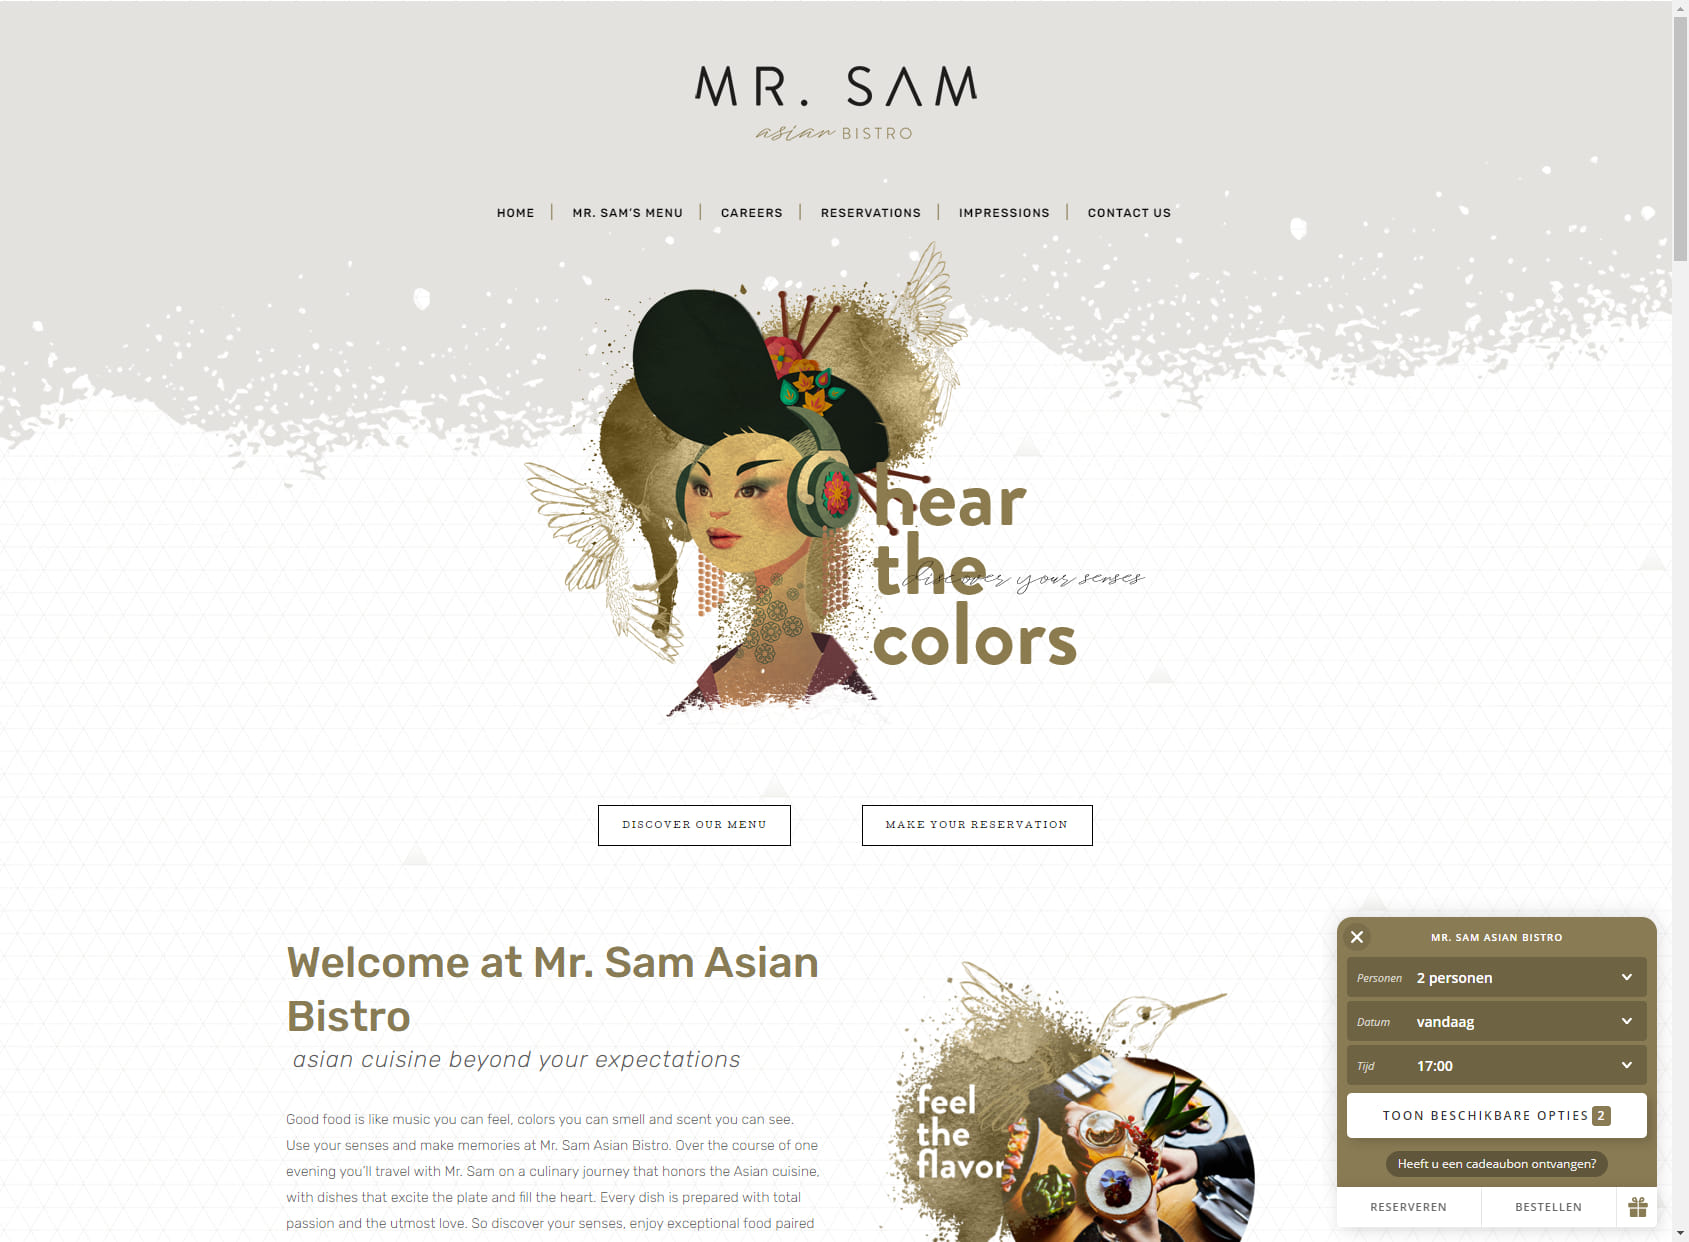 Mr. Sam Asian Bistro